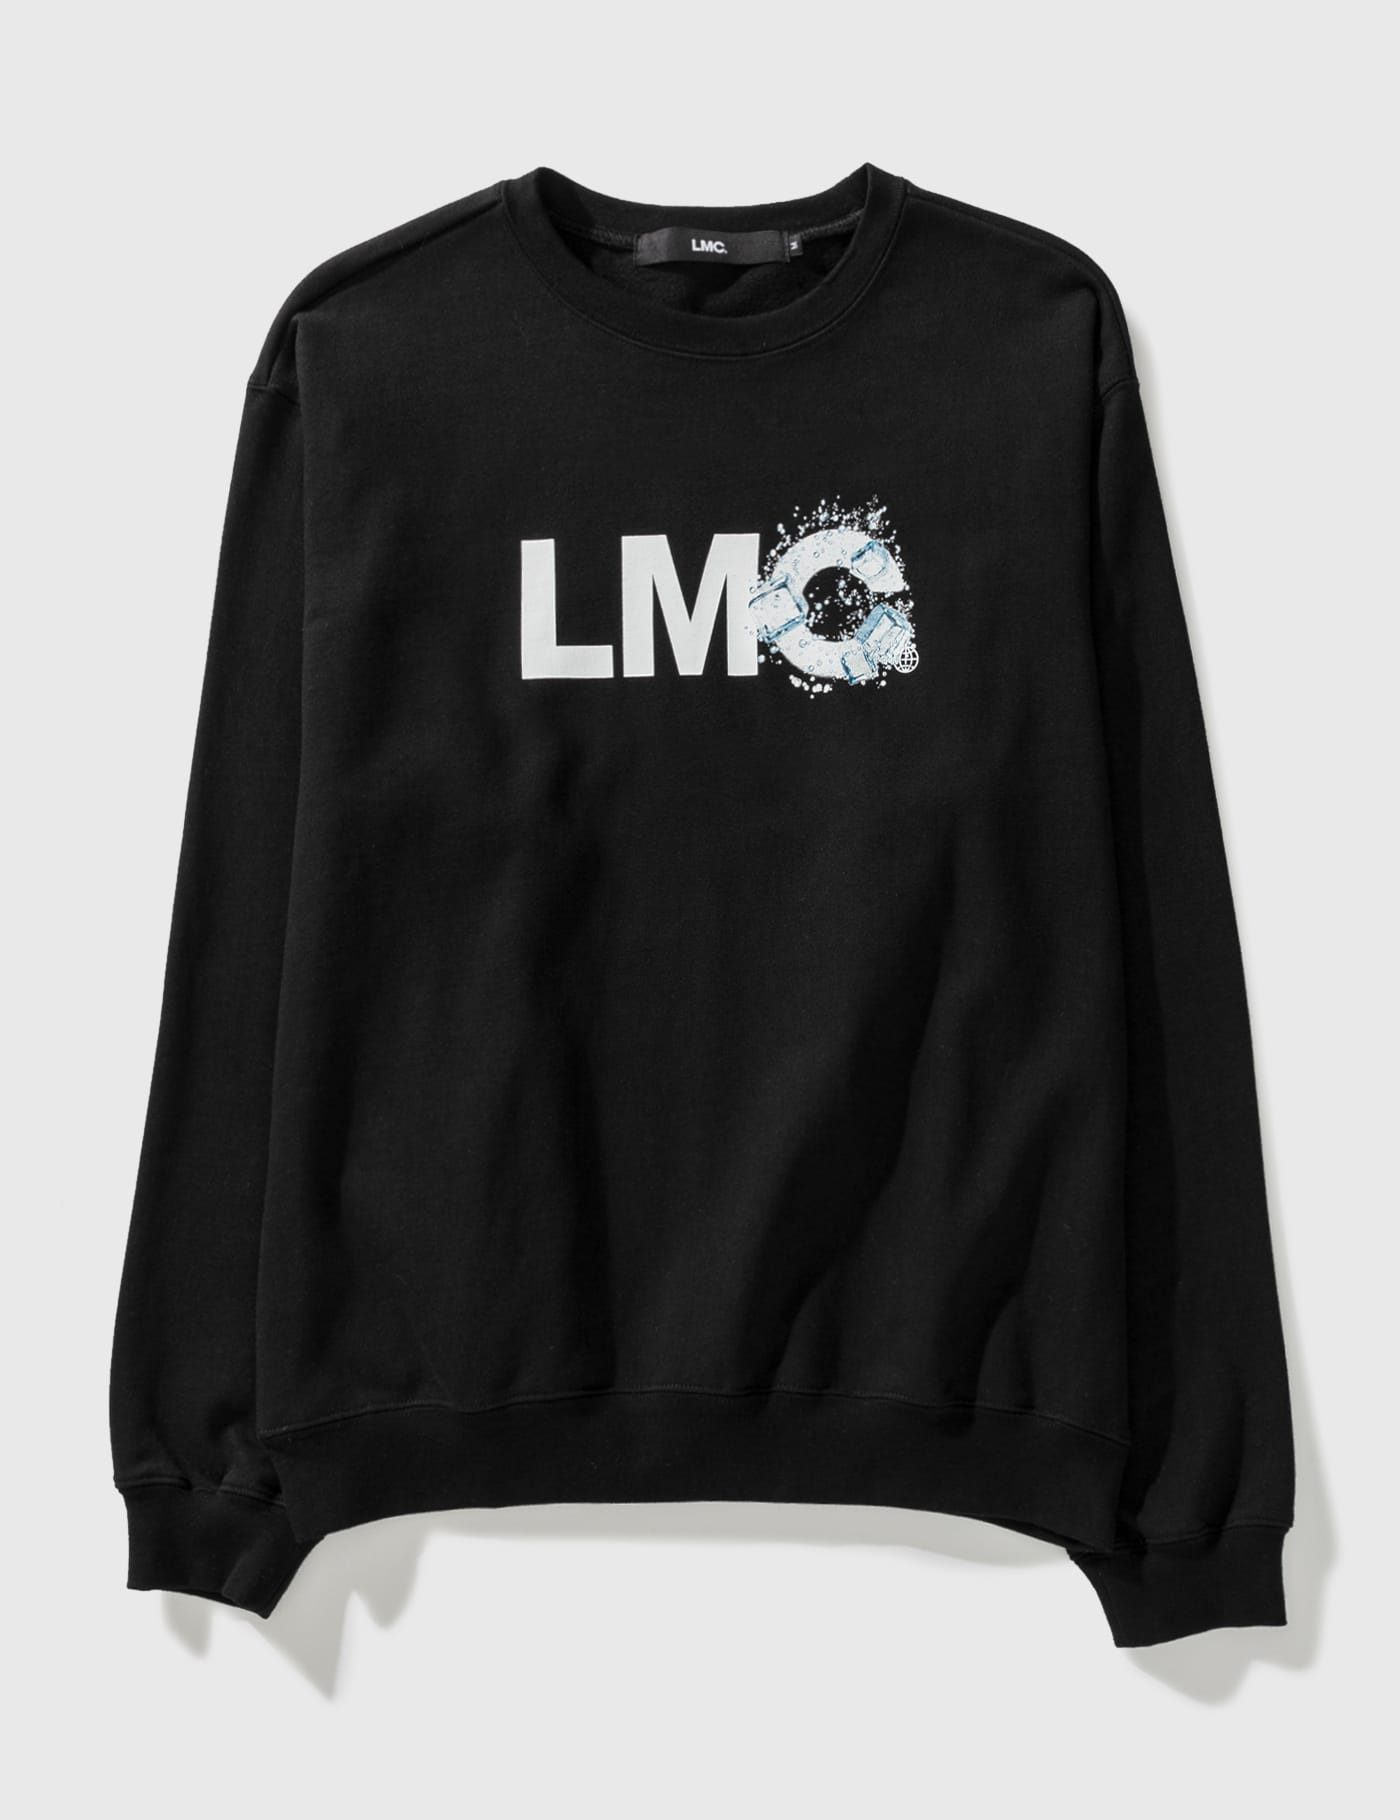 LMC - LMC Sparkling Ice Sweatshirt | HBX - Globally Curated 